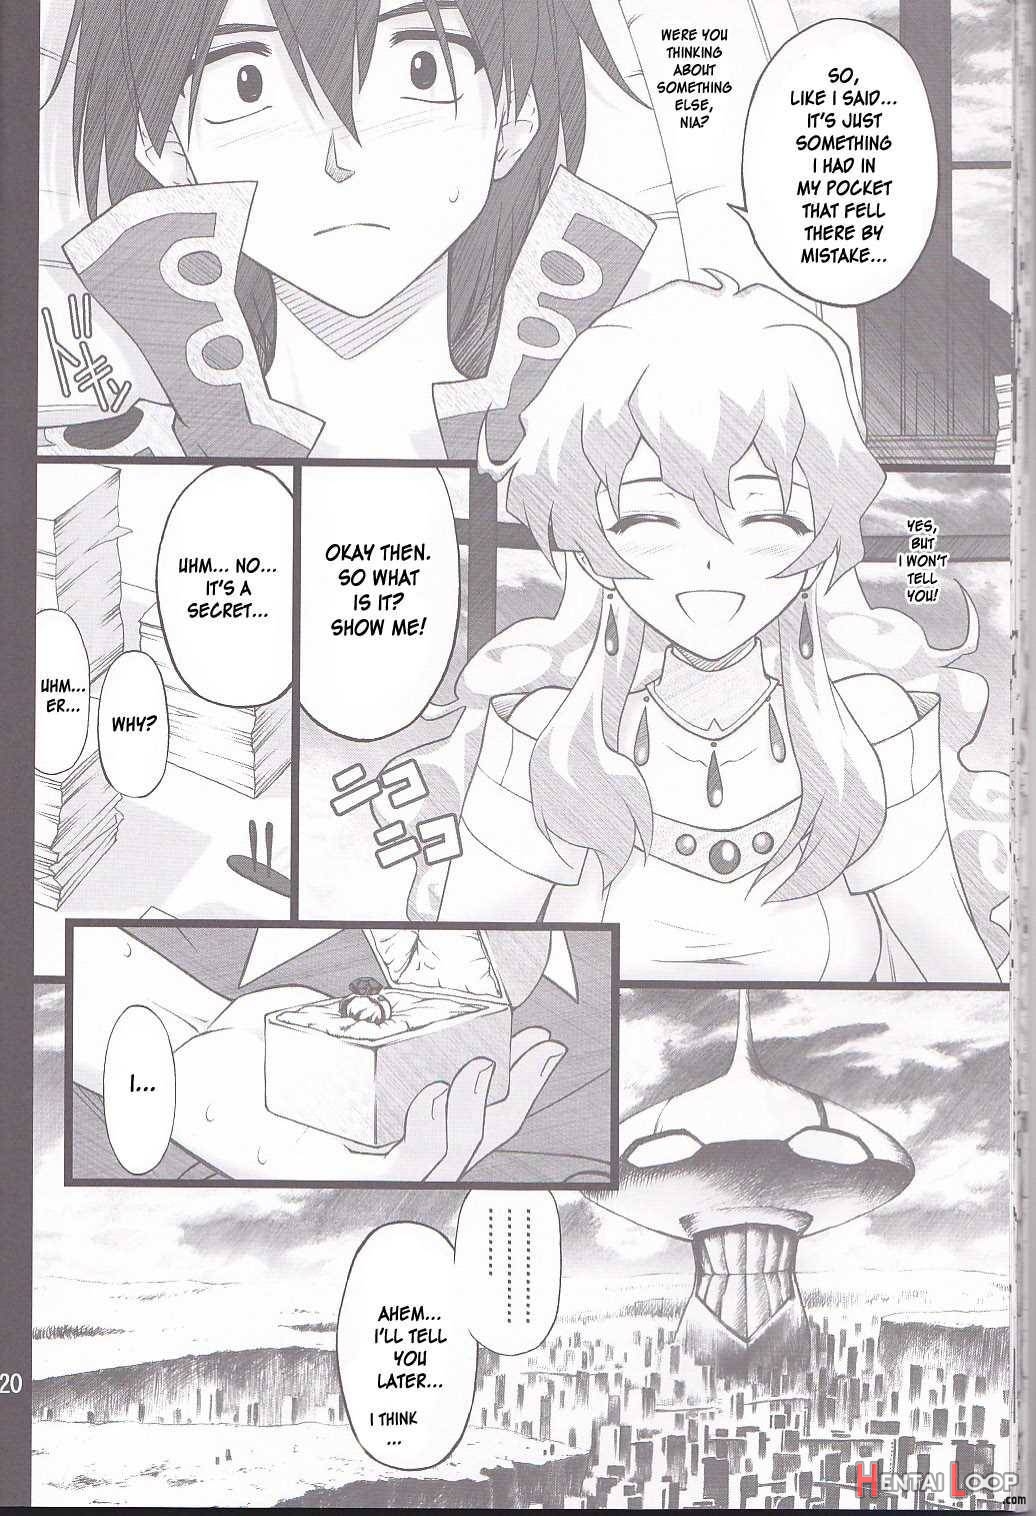 Oikari Nia-chan page 19